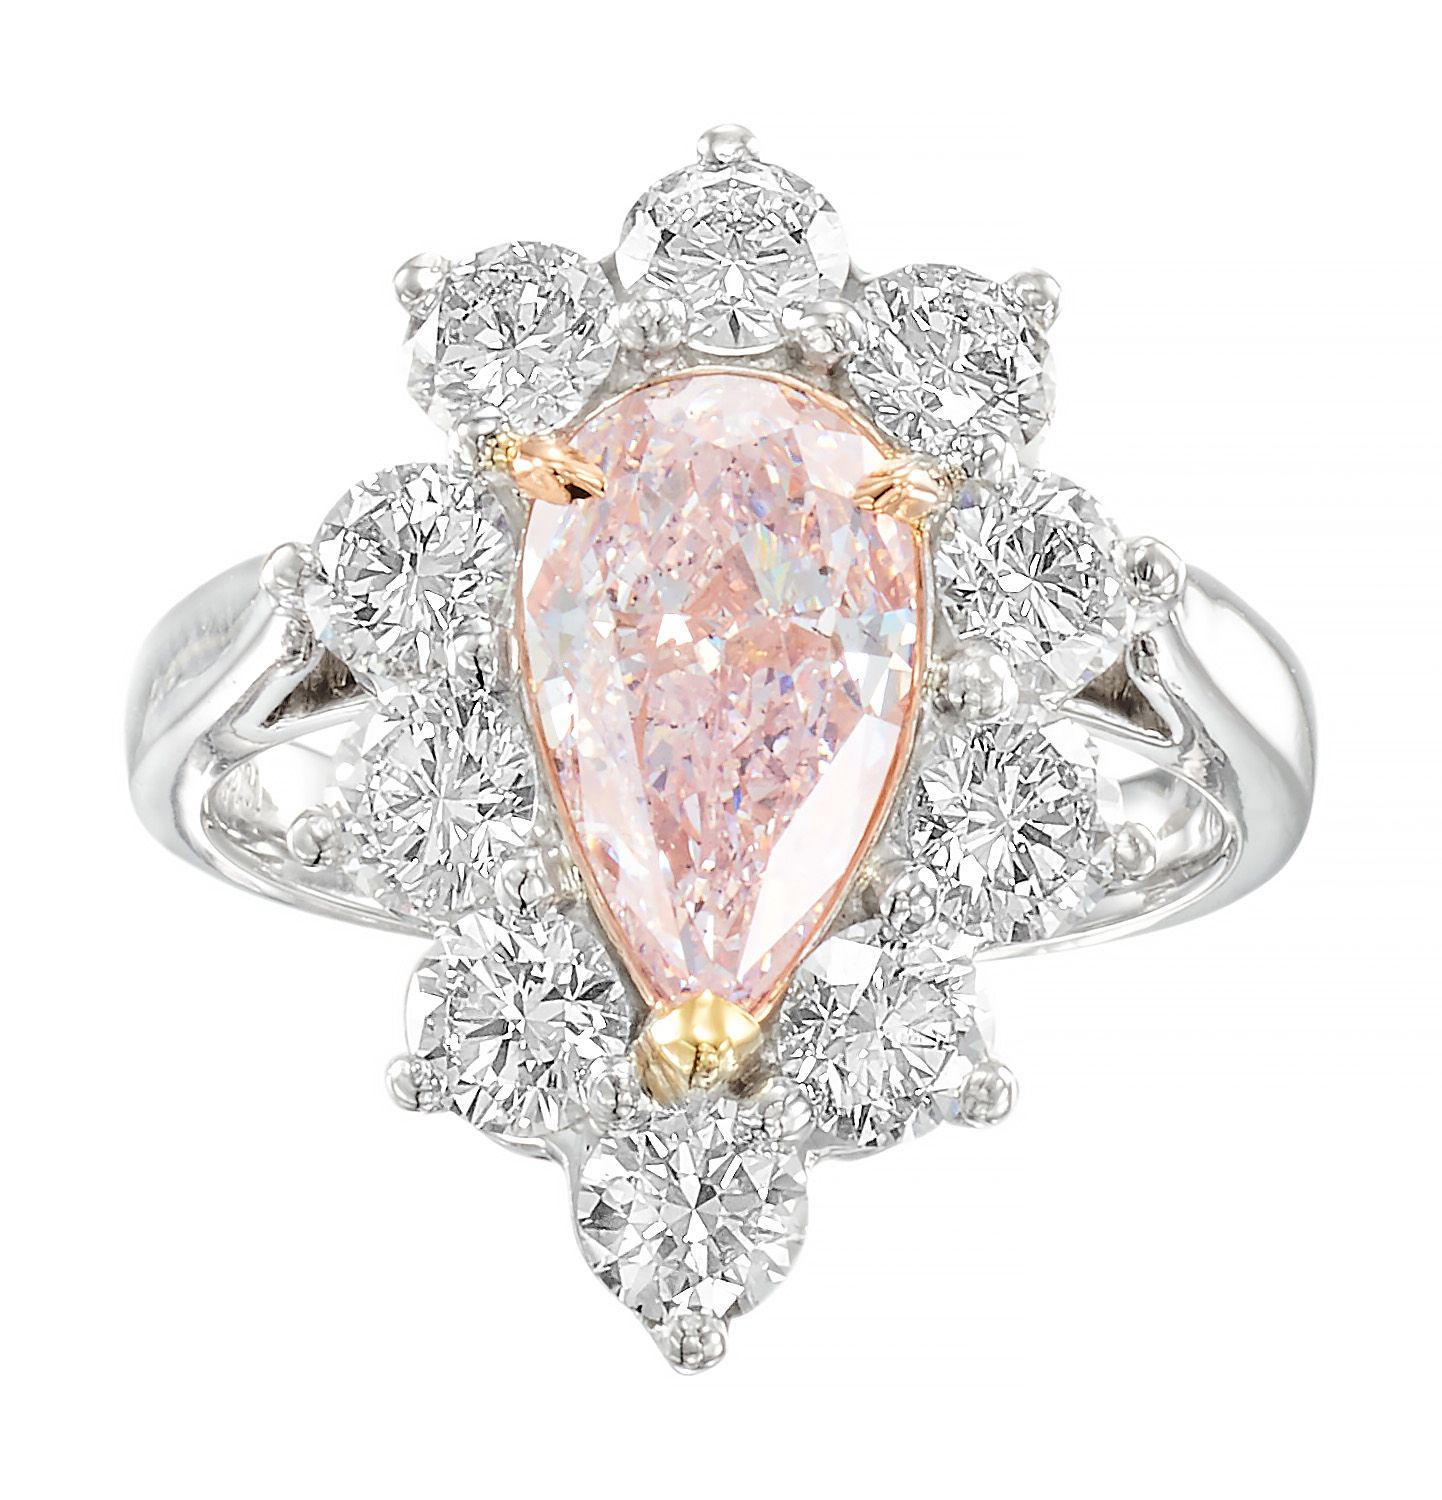 Rare, diamant "Rose" 梨形钻石，重2.04克拉，颜色很浅，净度为I1，周围有10颗优质的明亮型切割白钻，共重约2.20克拉，安装在铂金戒指上&hellip;